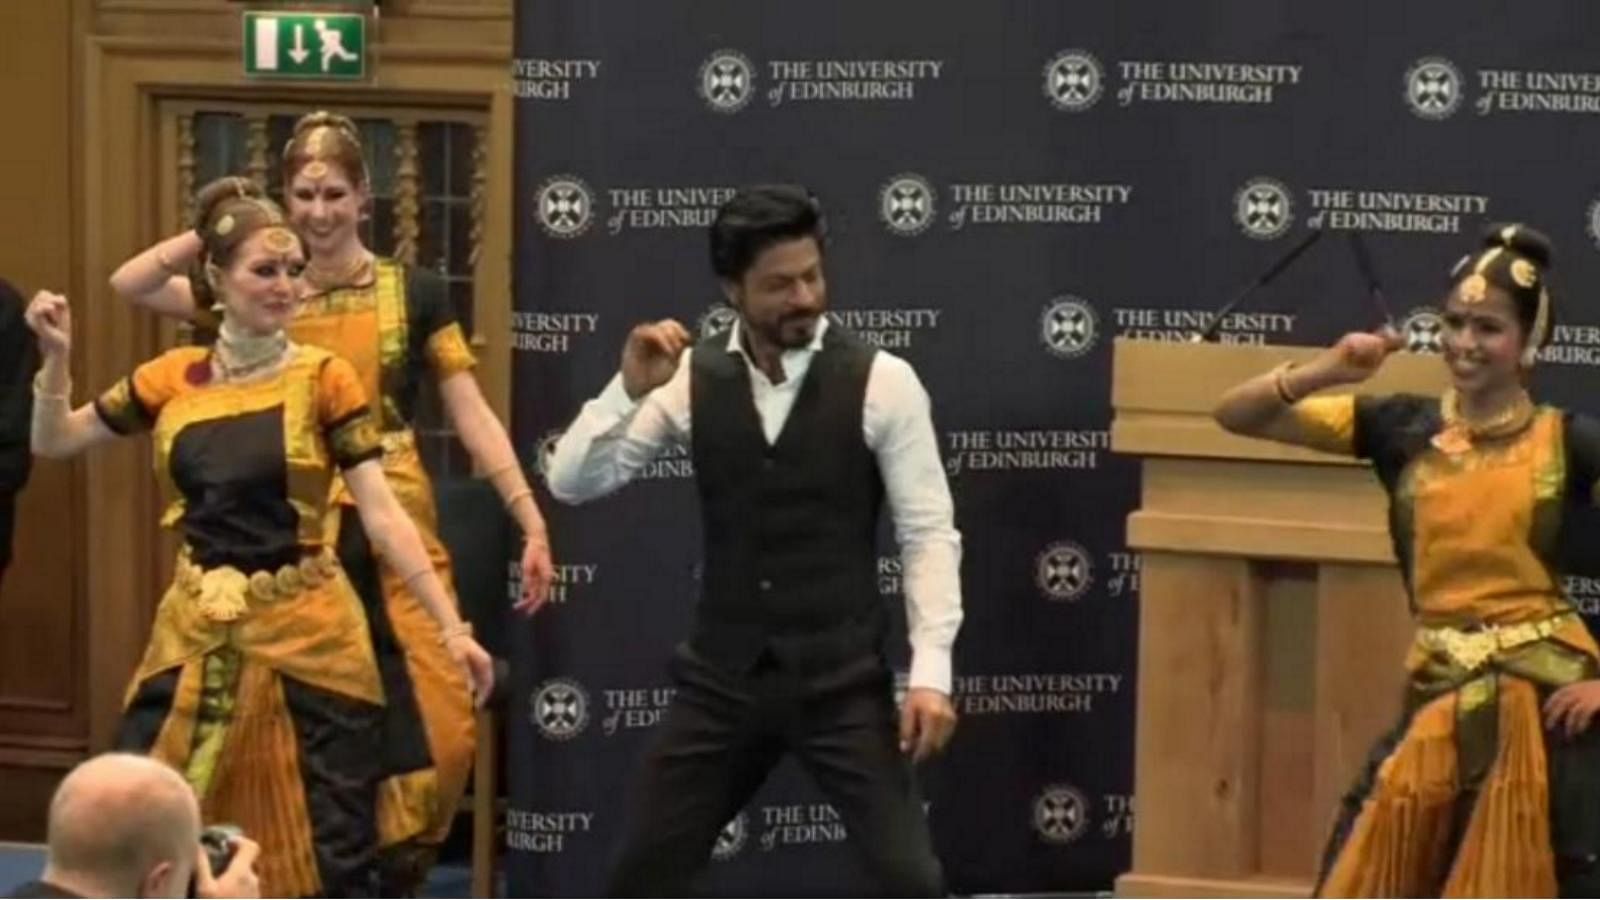 Shah Rukh Khan doing the ‘<i>lungi</i> dance’ at the University of Edinburgh (Photo:<a href="https://twitter.com/search?f=images&amp;vertical=default&amp;q=shah%20rukh%20dance%20edinburg&amp;src=typd"> Twitter/@SRKUniversityMasia</a>)